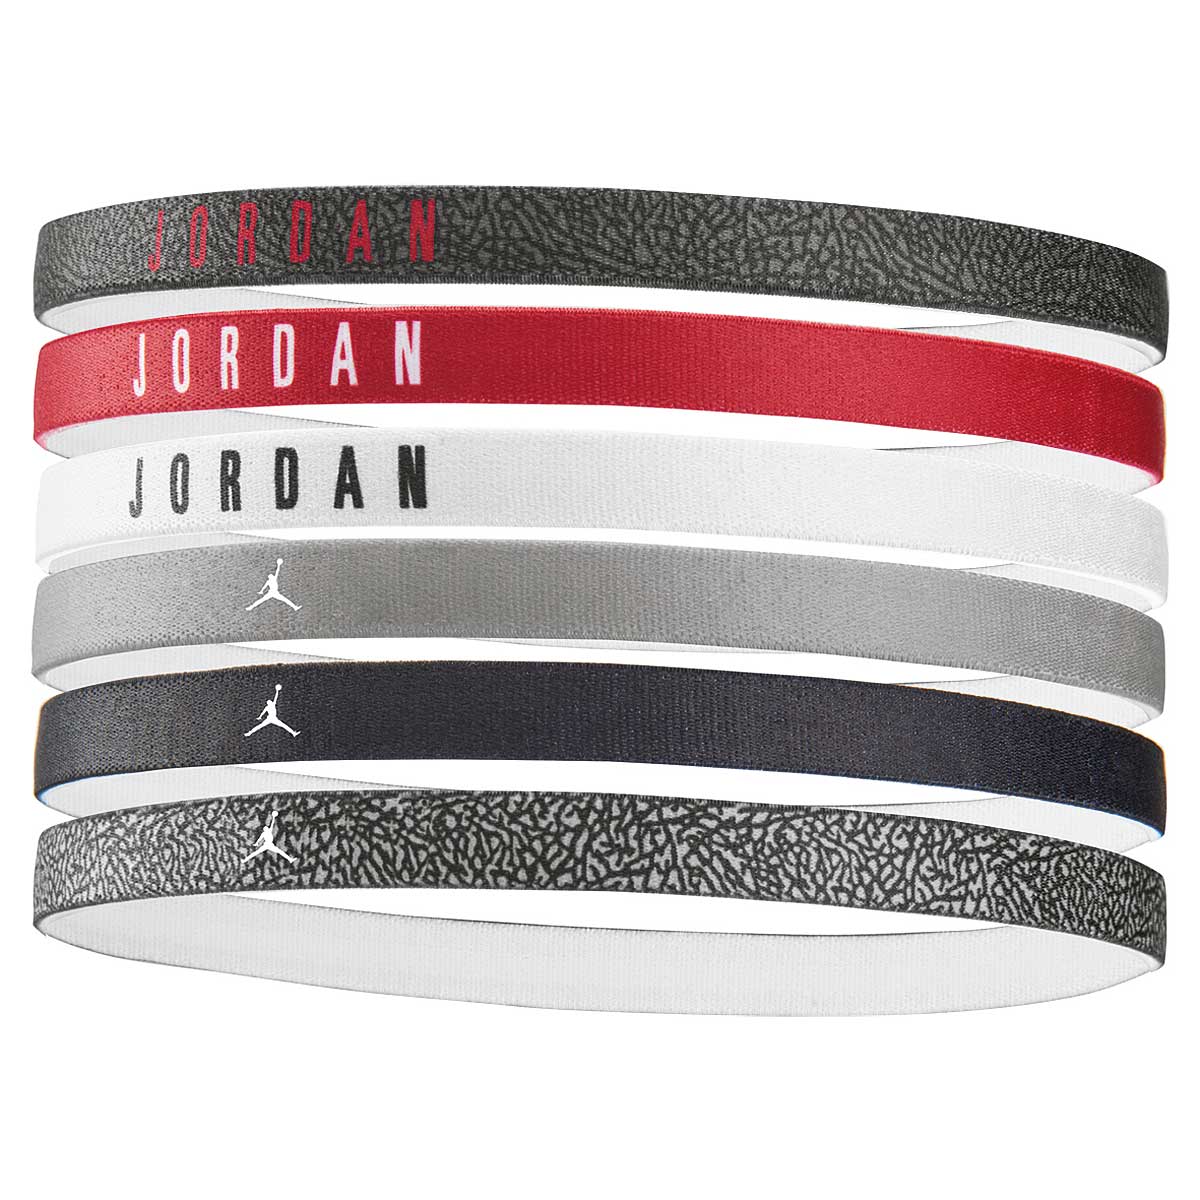 Jordan Elastic 6 Pk, 061 Black/Gym Red/White